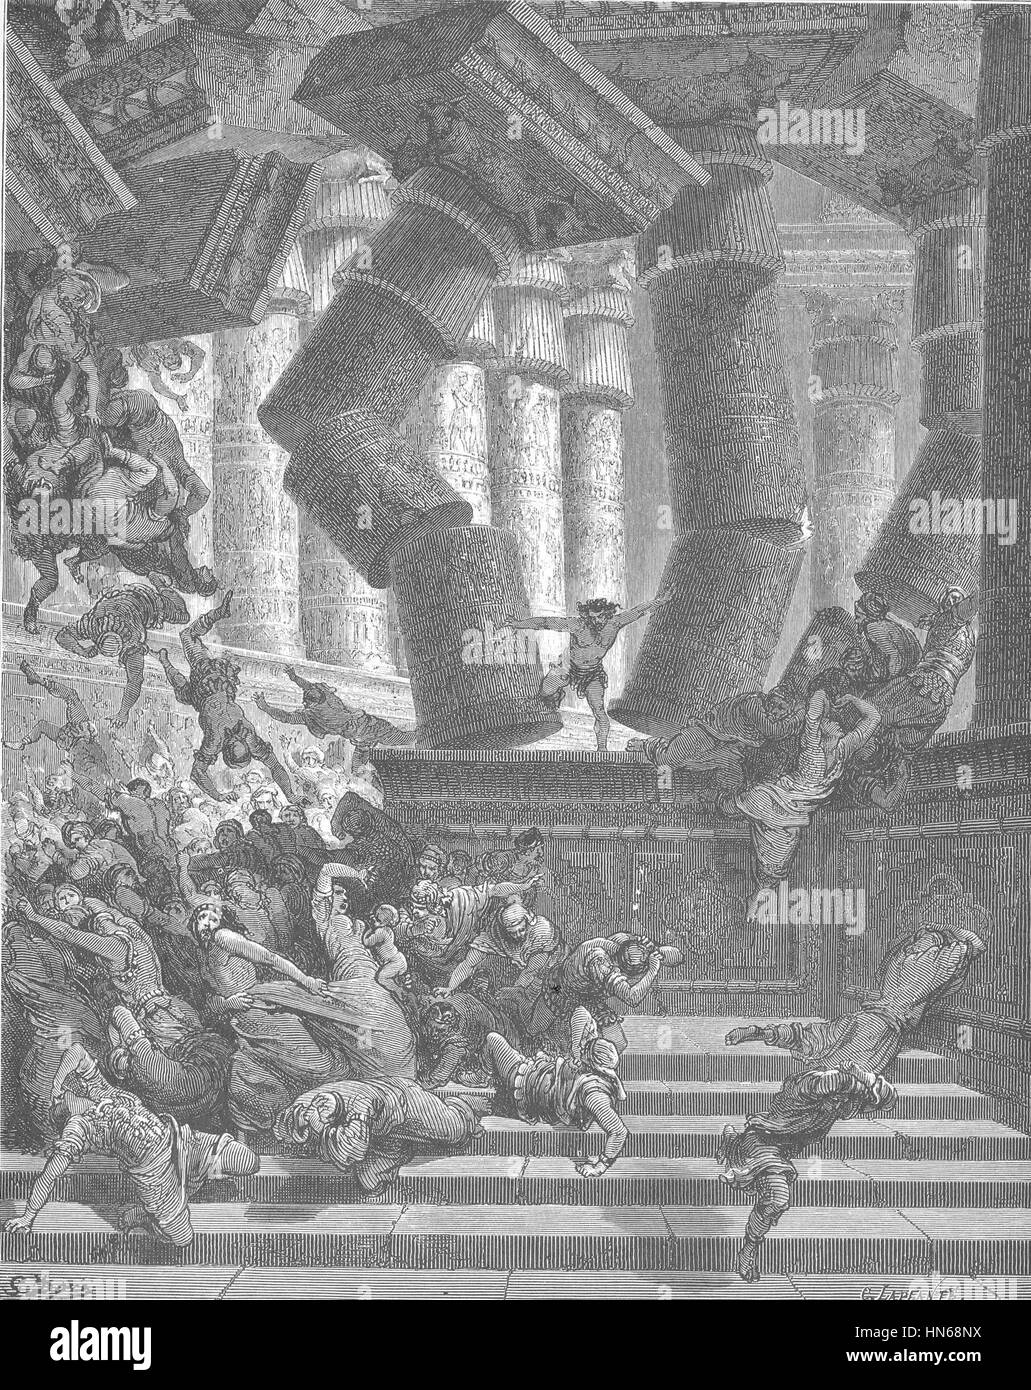 064.The Death of Samson Stock Photo - Alamy